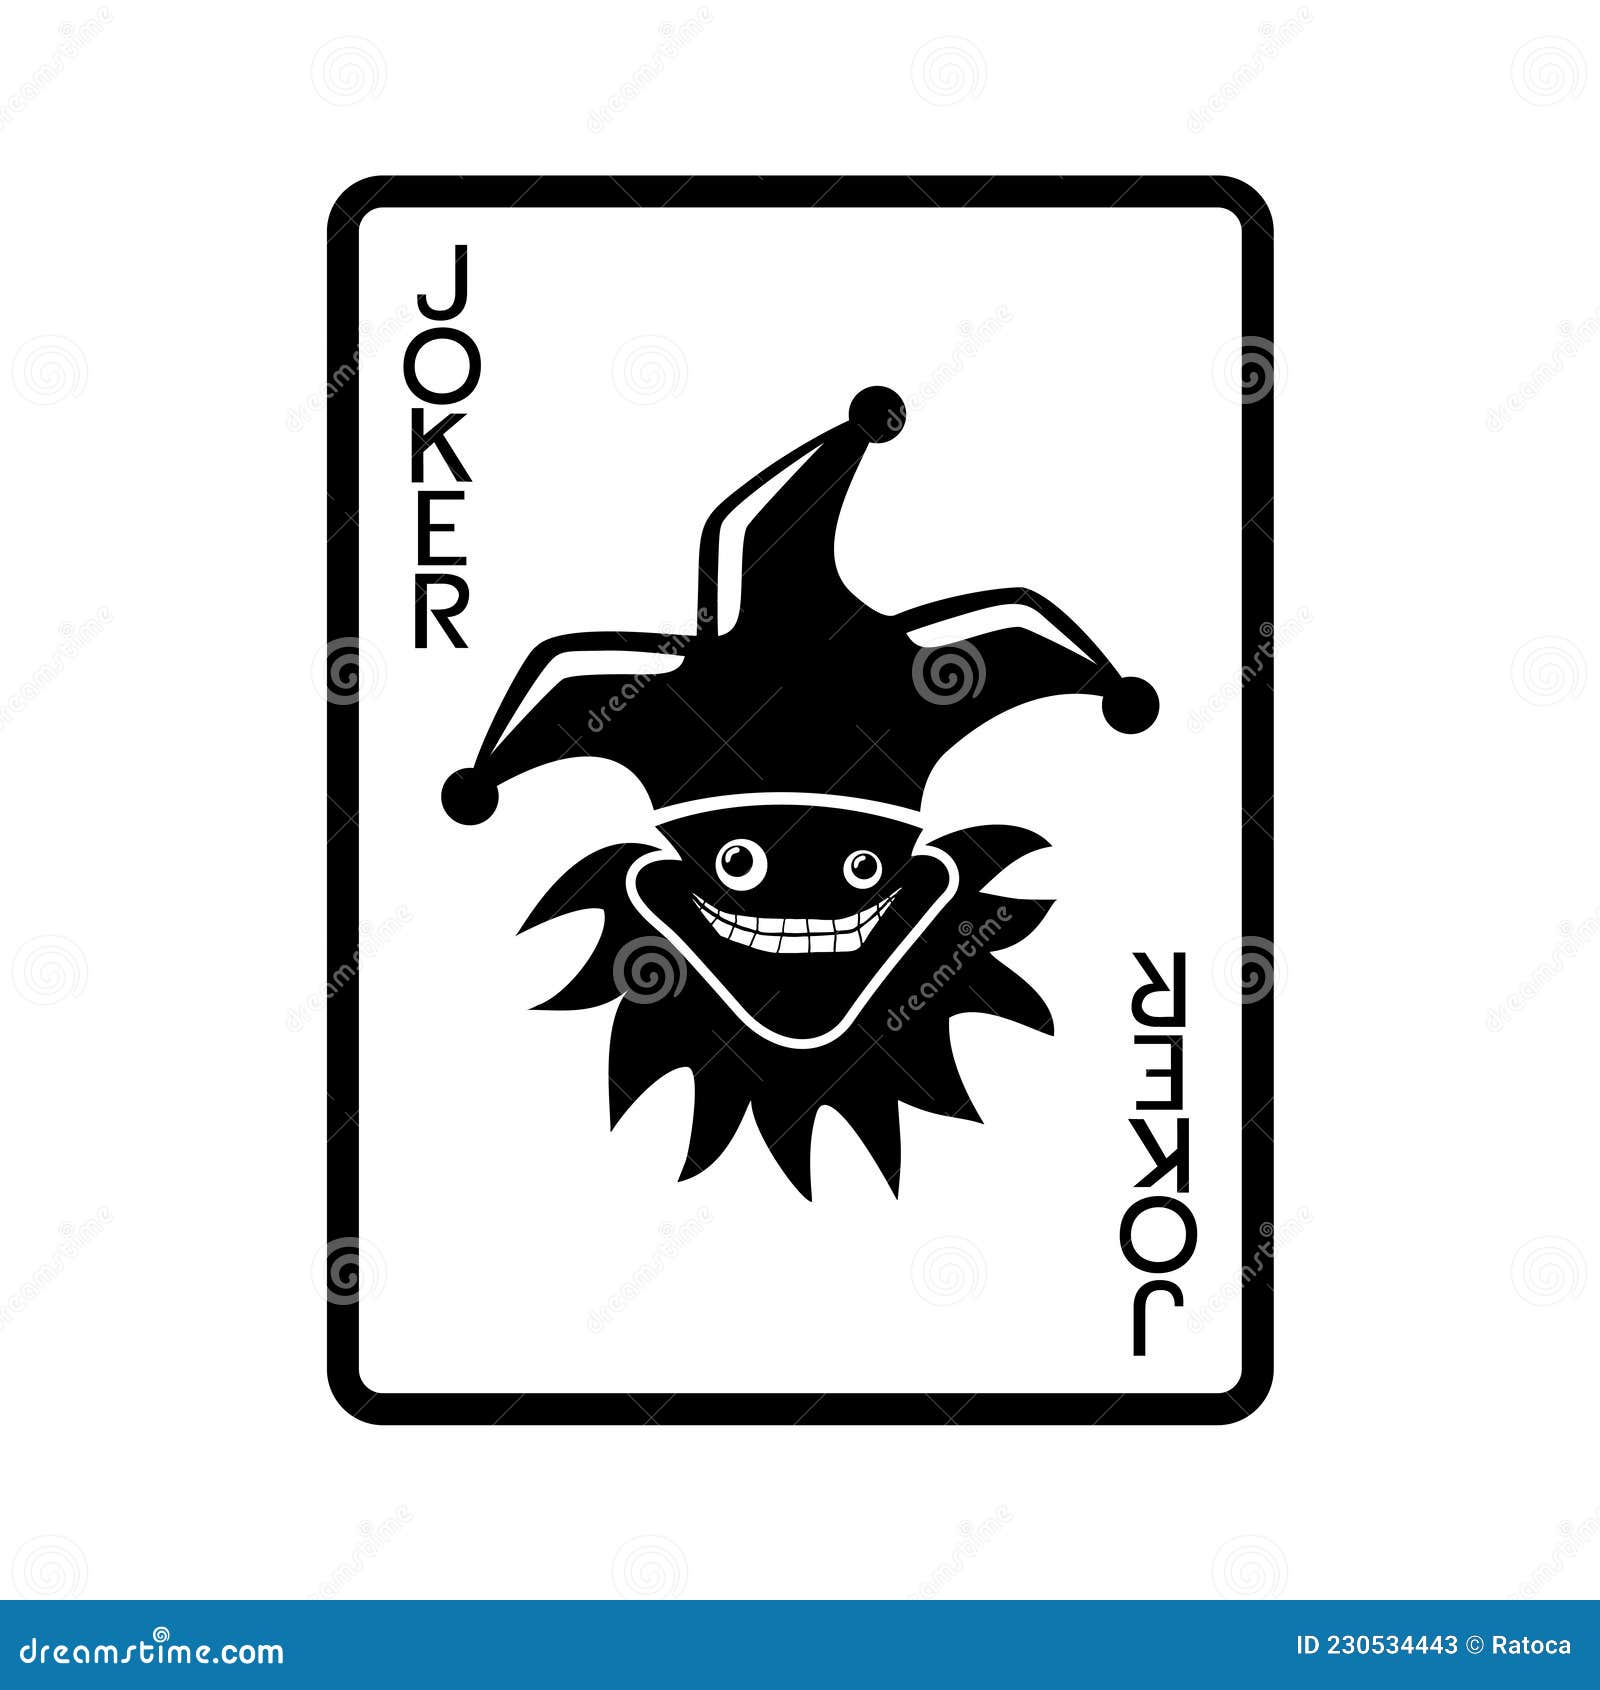 Creative Design of Joker Card Stock Vector - Illustration of In Joker Card Template